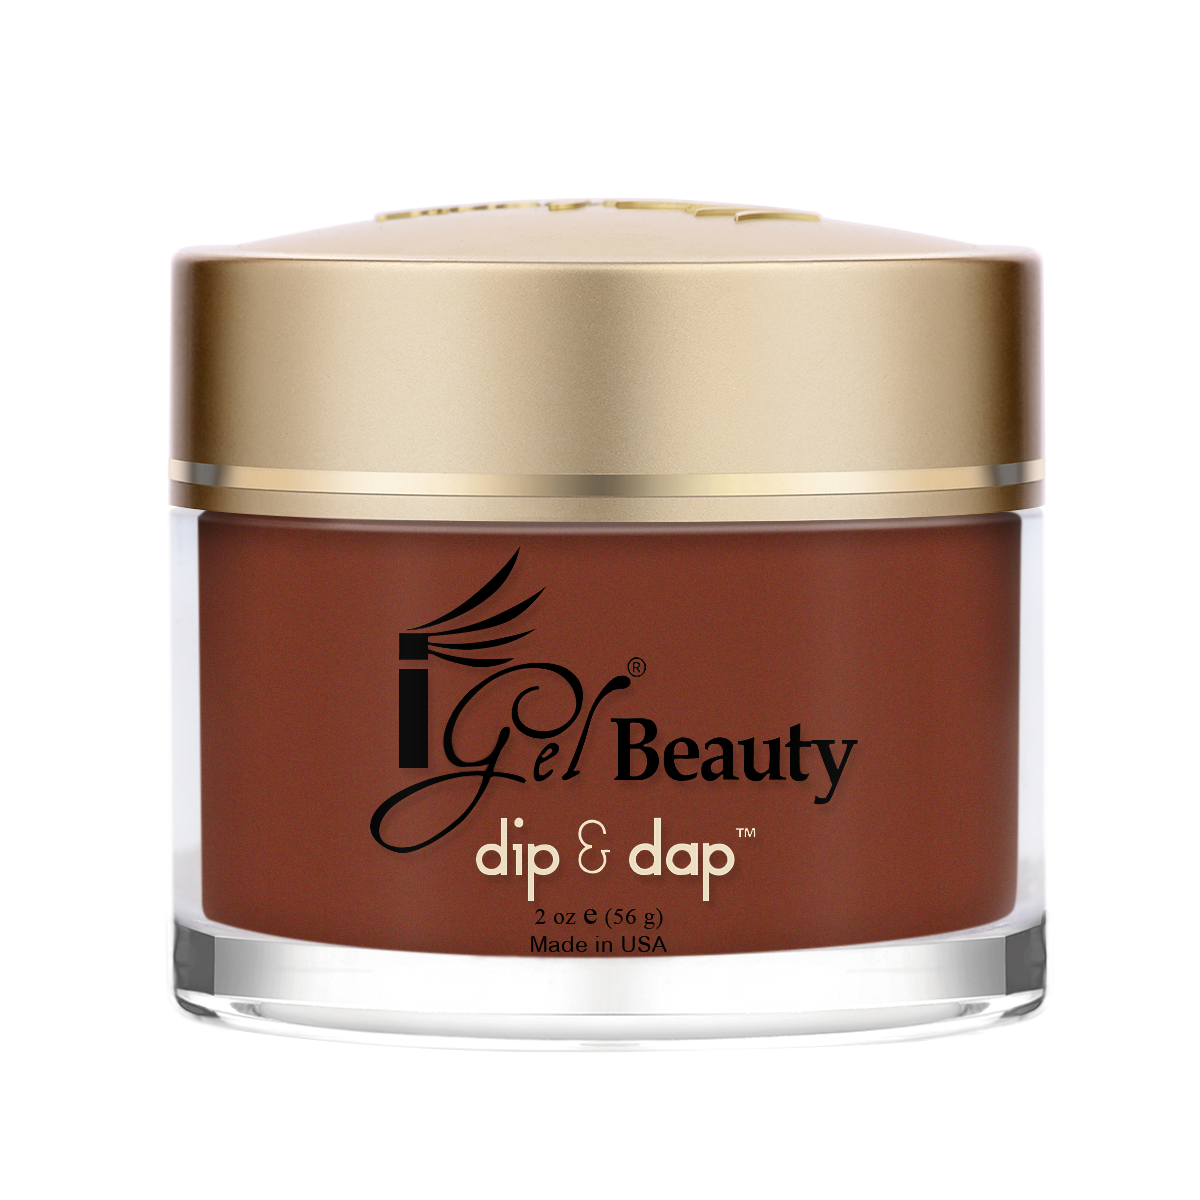 DD299 Certainty Dip and Dap Powder 2oz By IGel Beauty